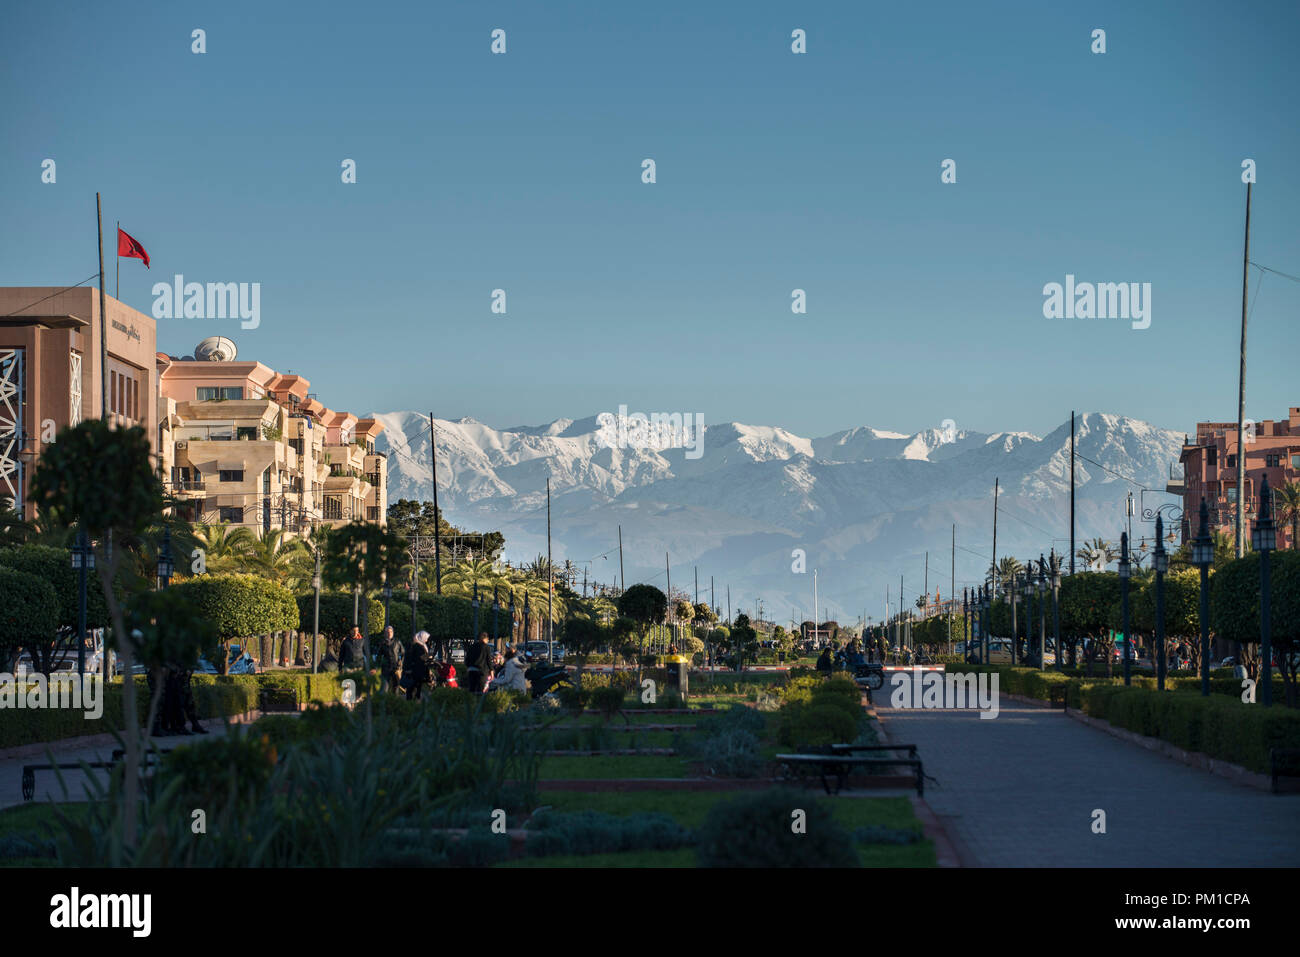 26-02-15, Marrakesch, Marokko. Das Atlasgebirge gesehen vom Boulevard Mohamed VI. Foto © Simon Grosset Stockfoto